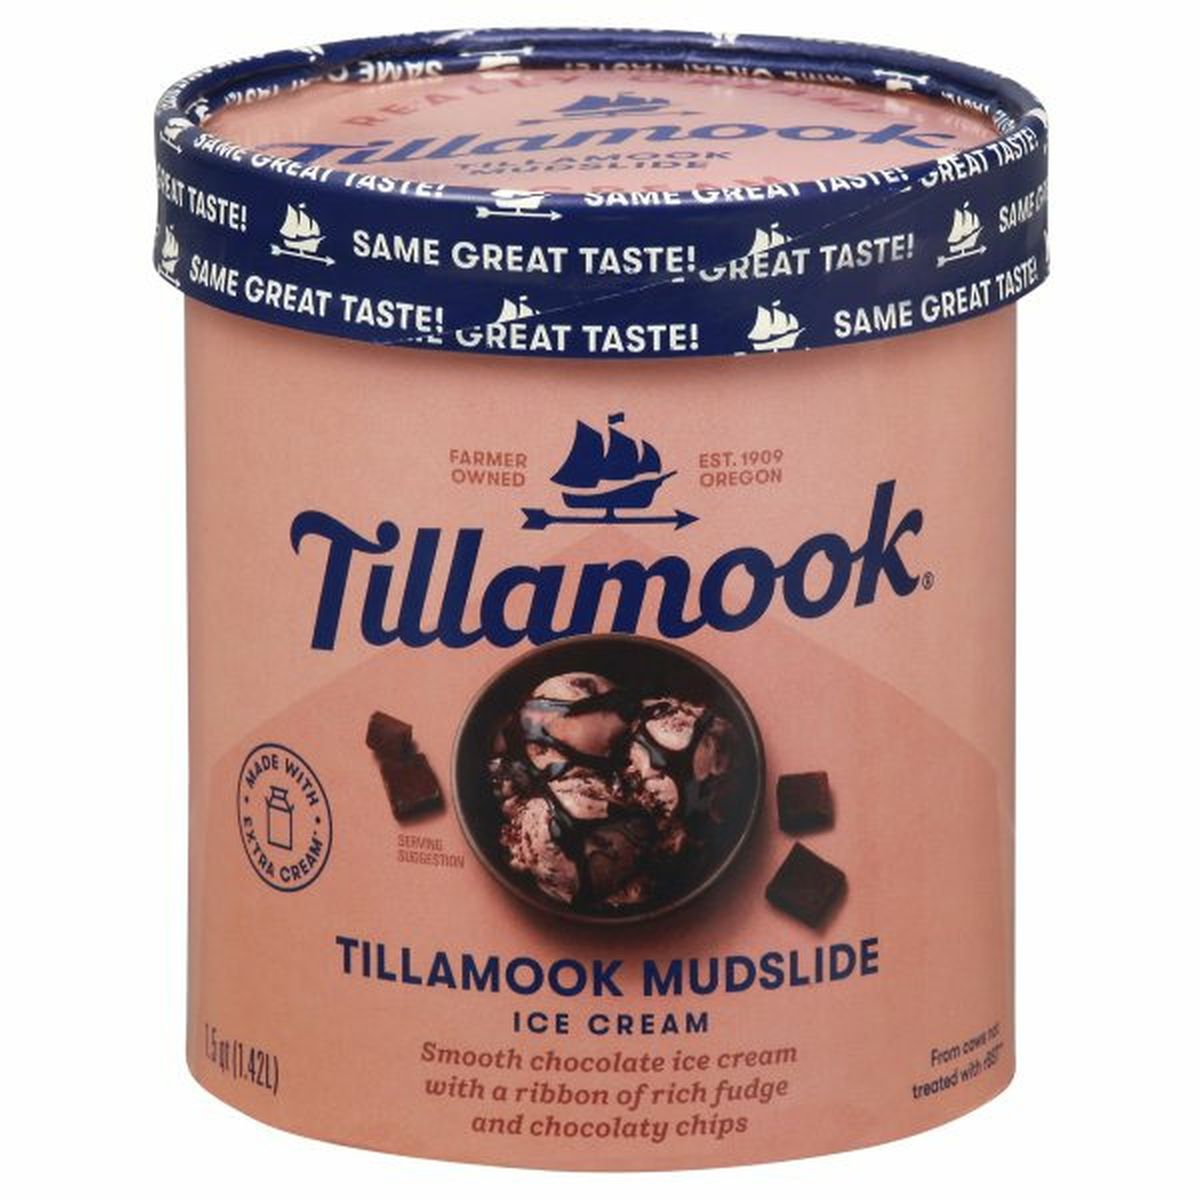 Calories in Tillamook Ice Cream, Tillamook Mudslide